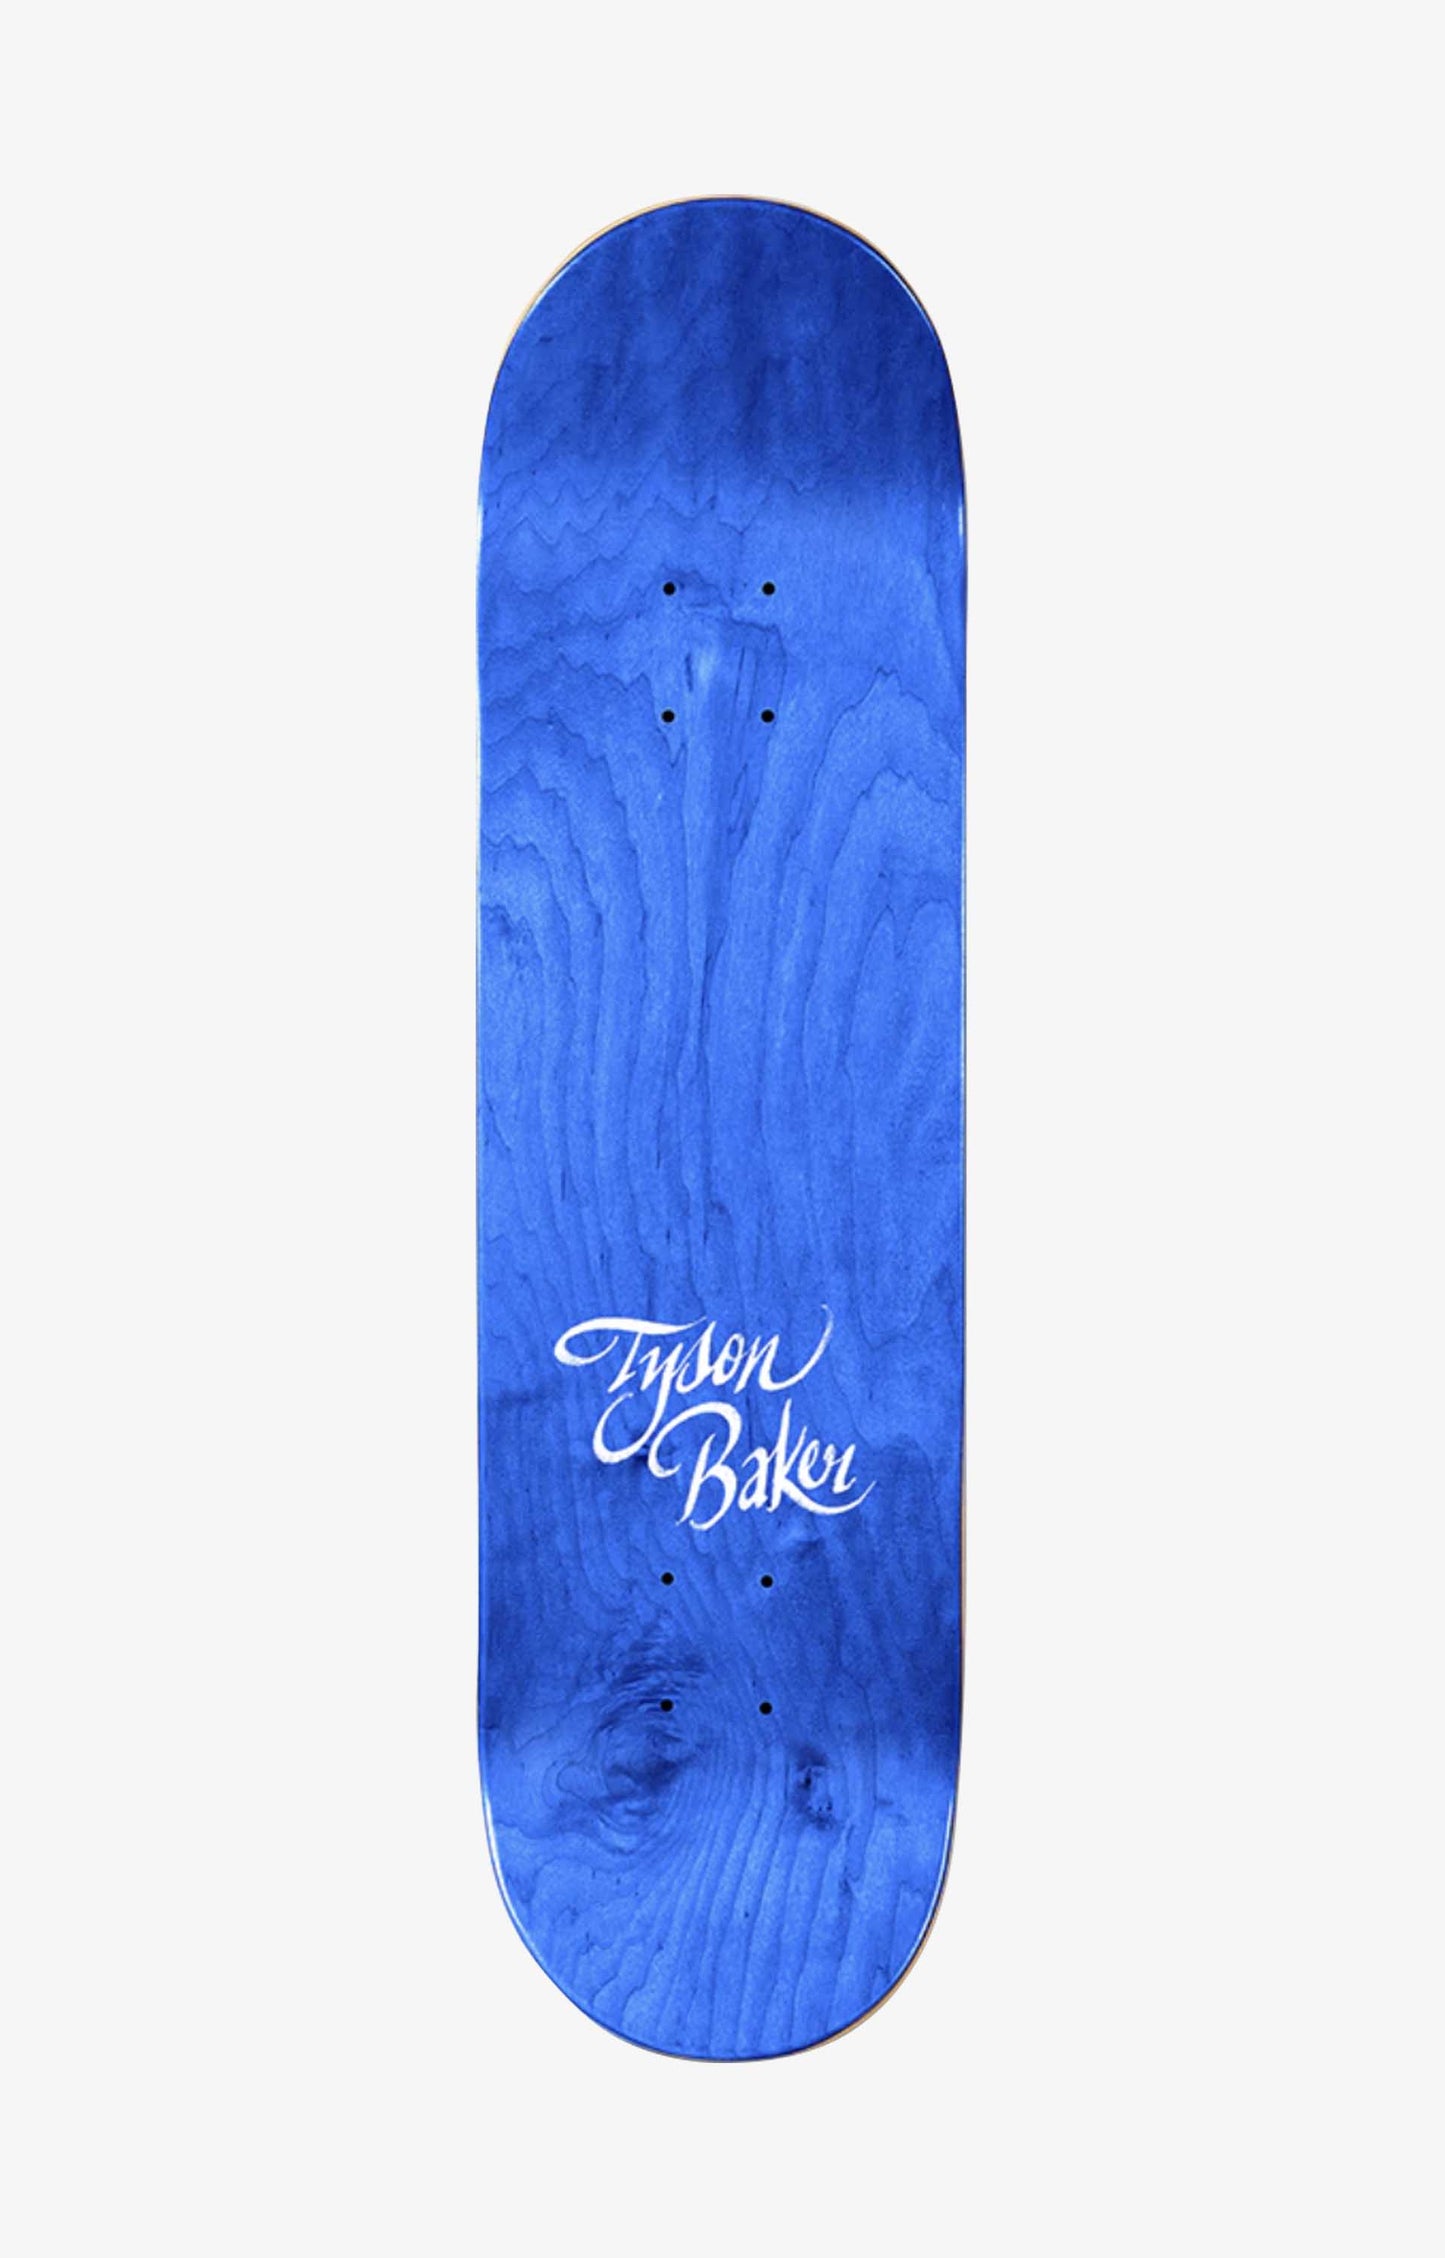 Baker Tyson Painted Skateboard Deck, 8.5"